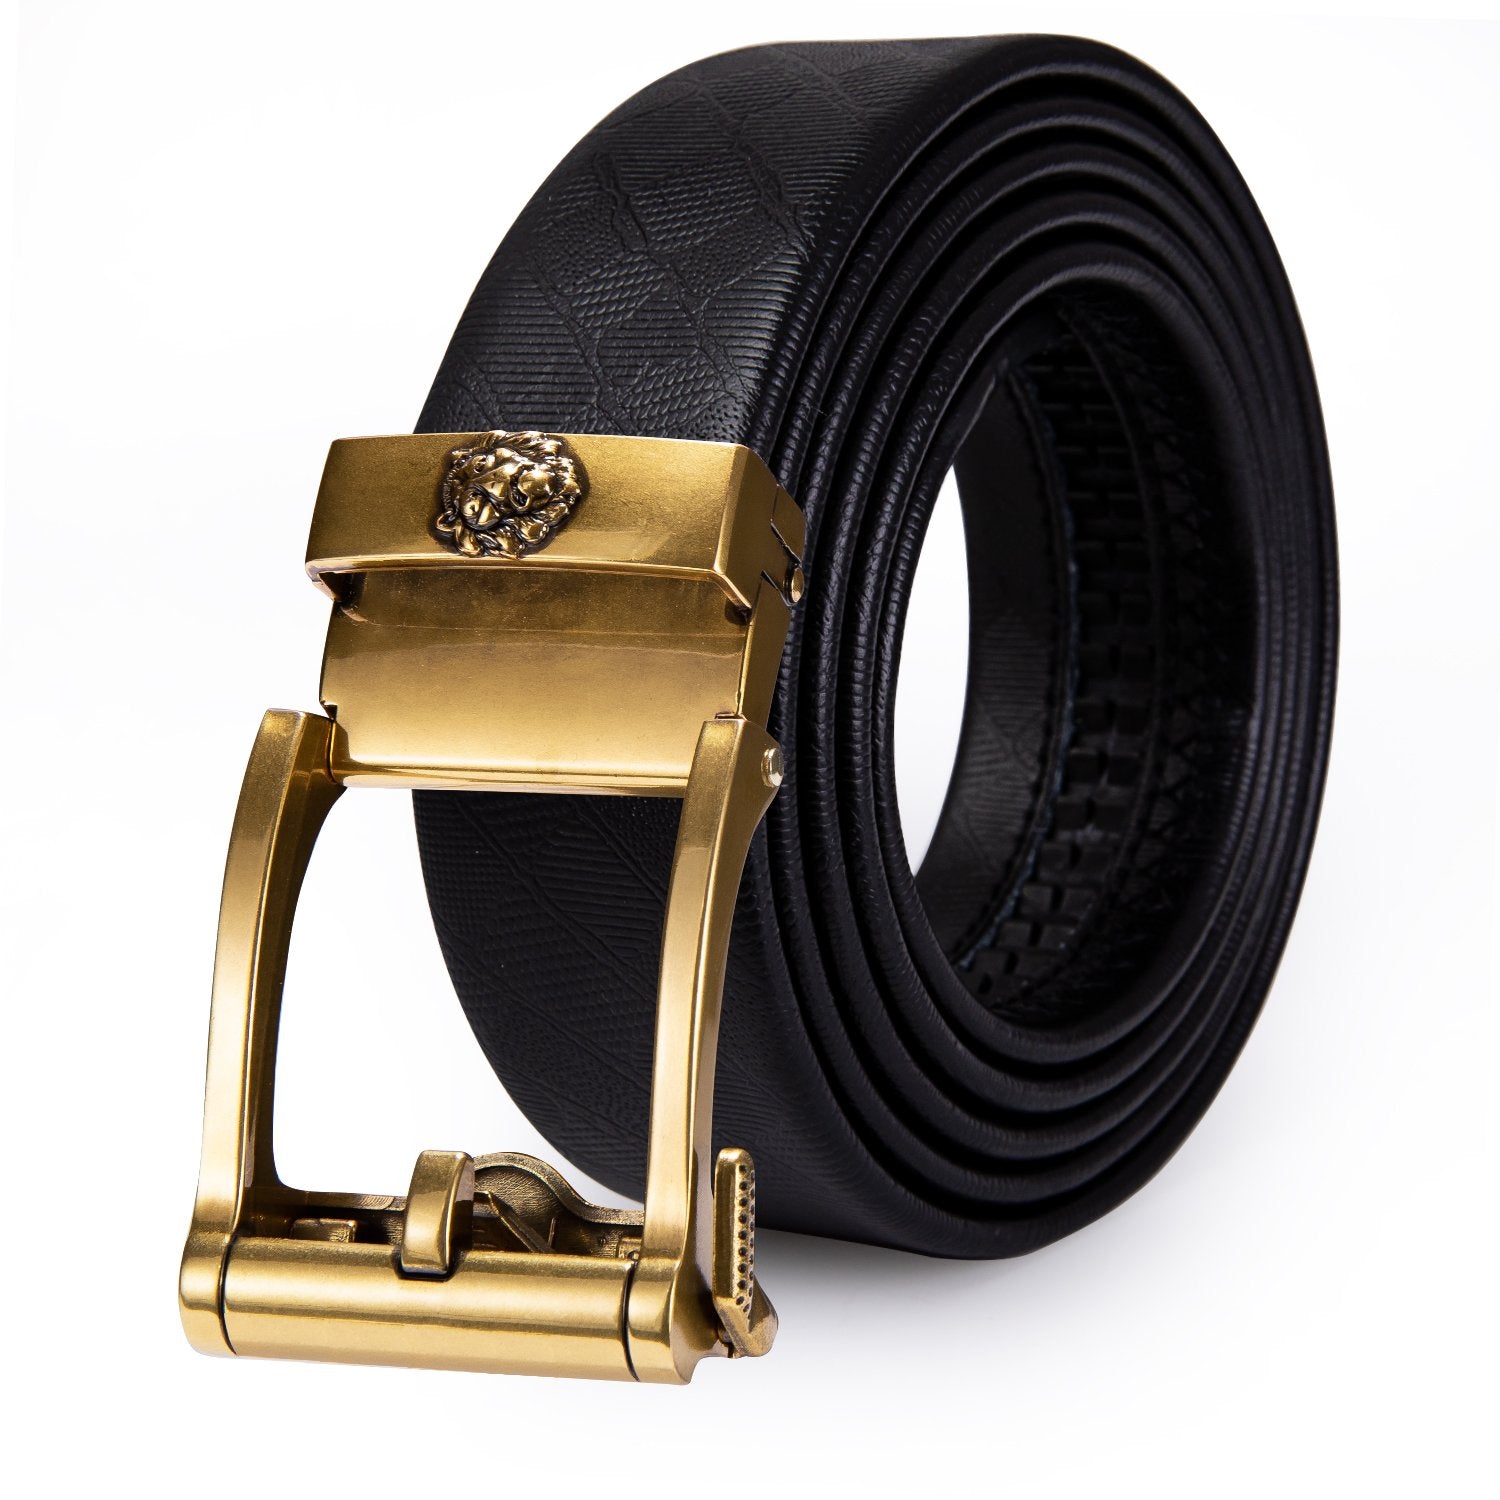 New Golden Lion Metal Buckle Genuine Leather Belt 110cm-160cm